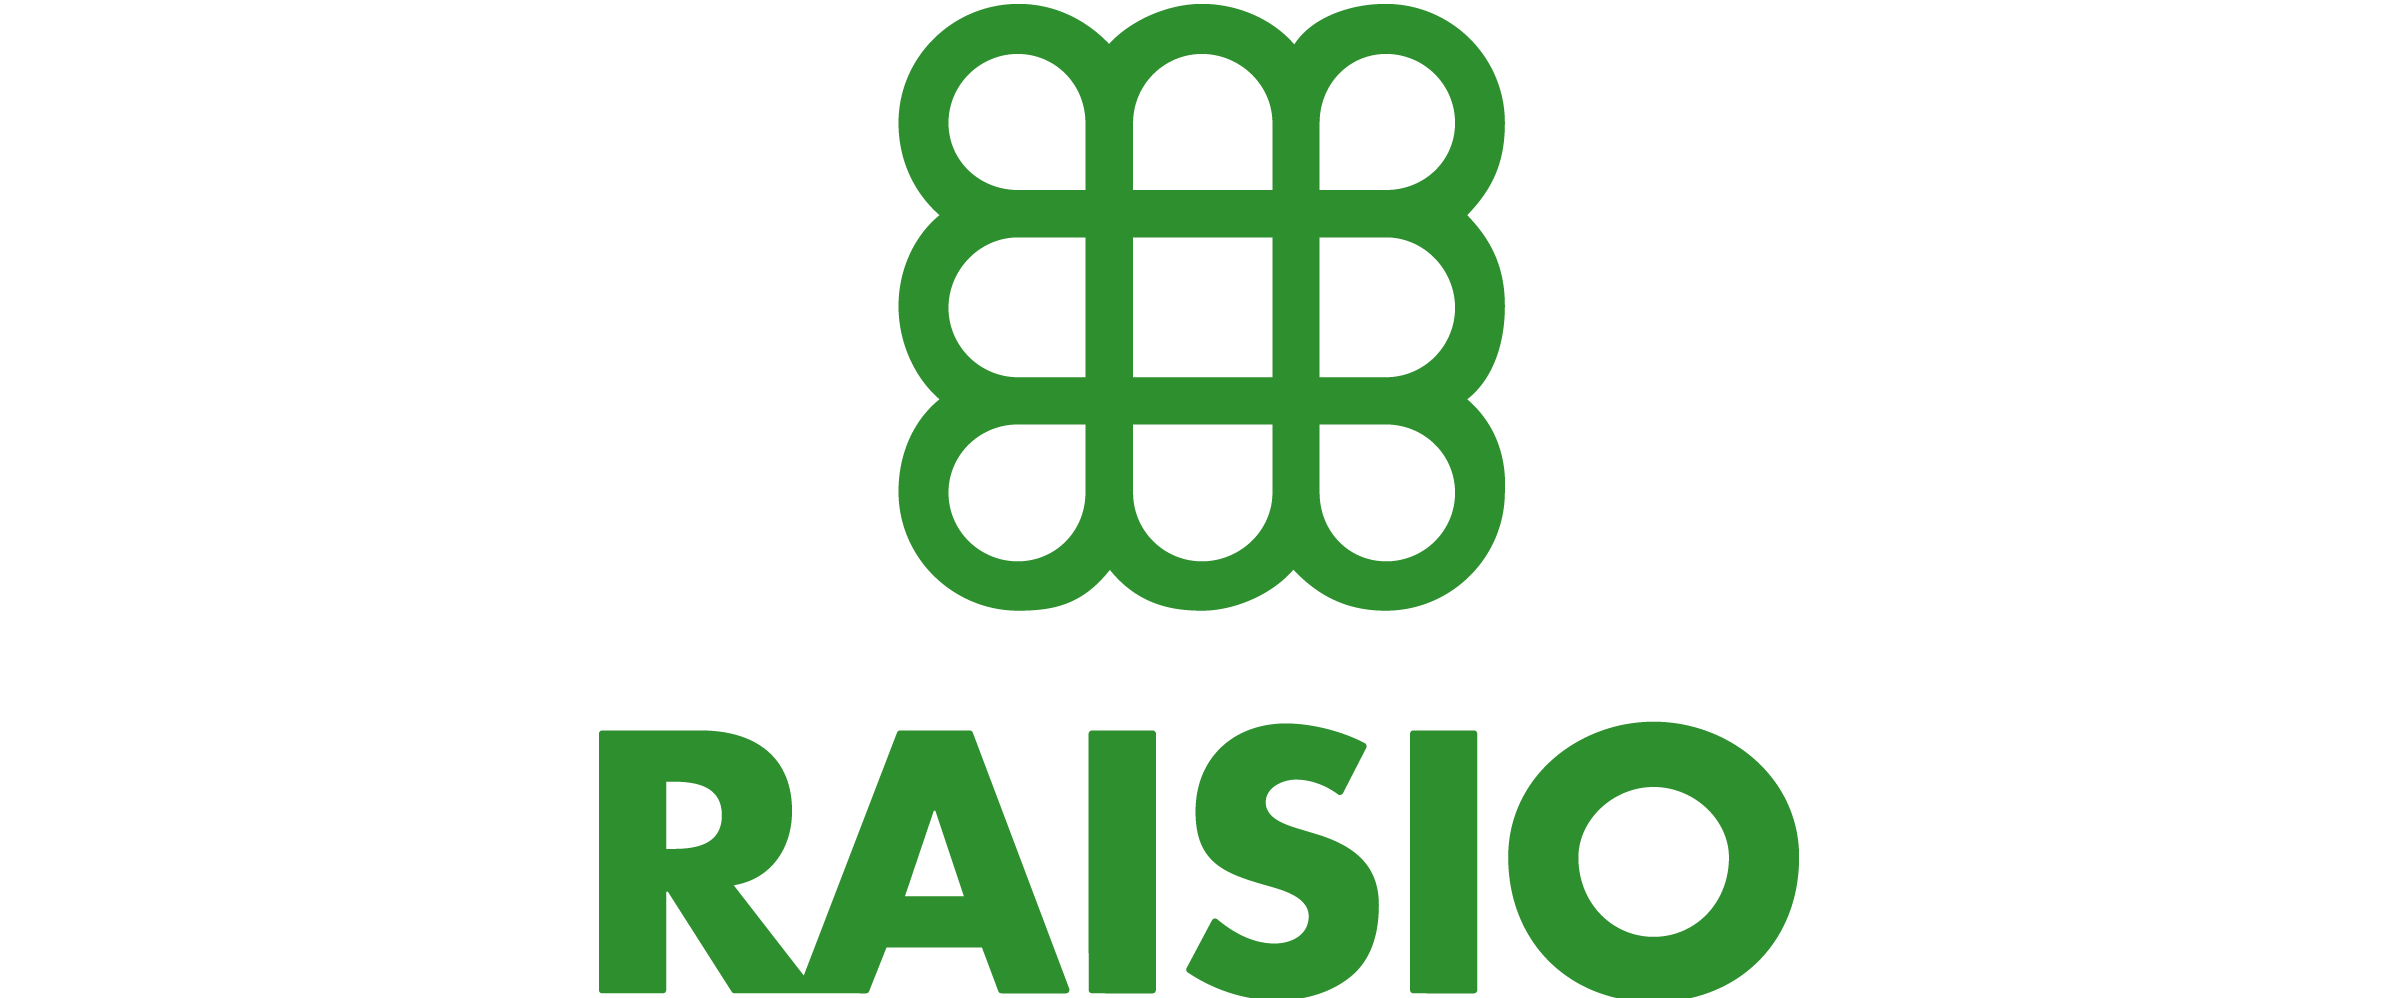 raisio-logo2